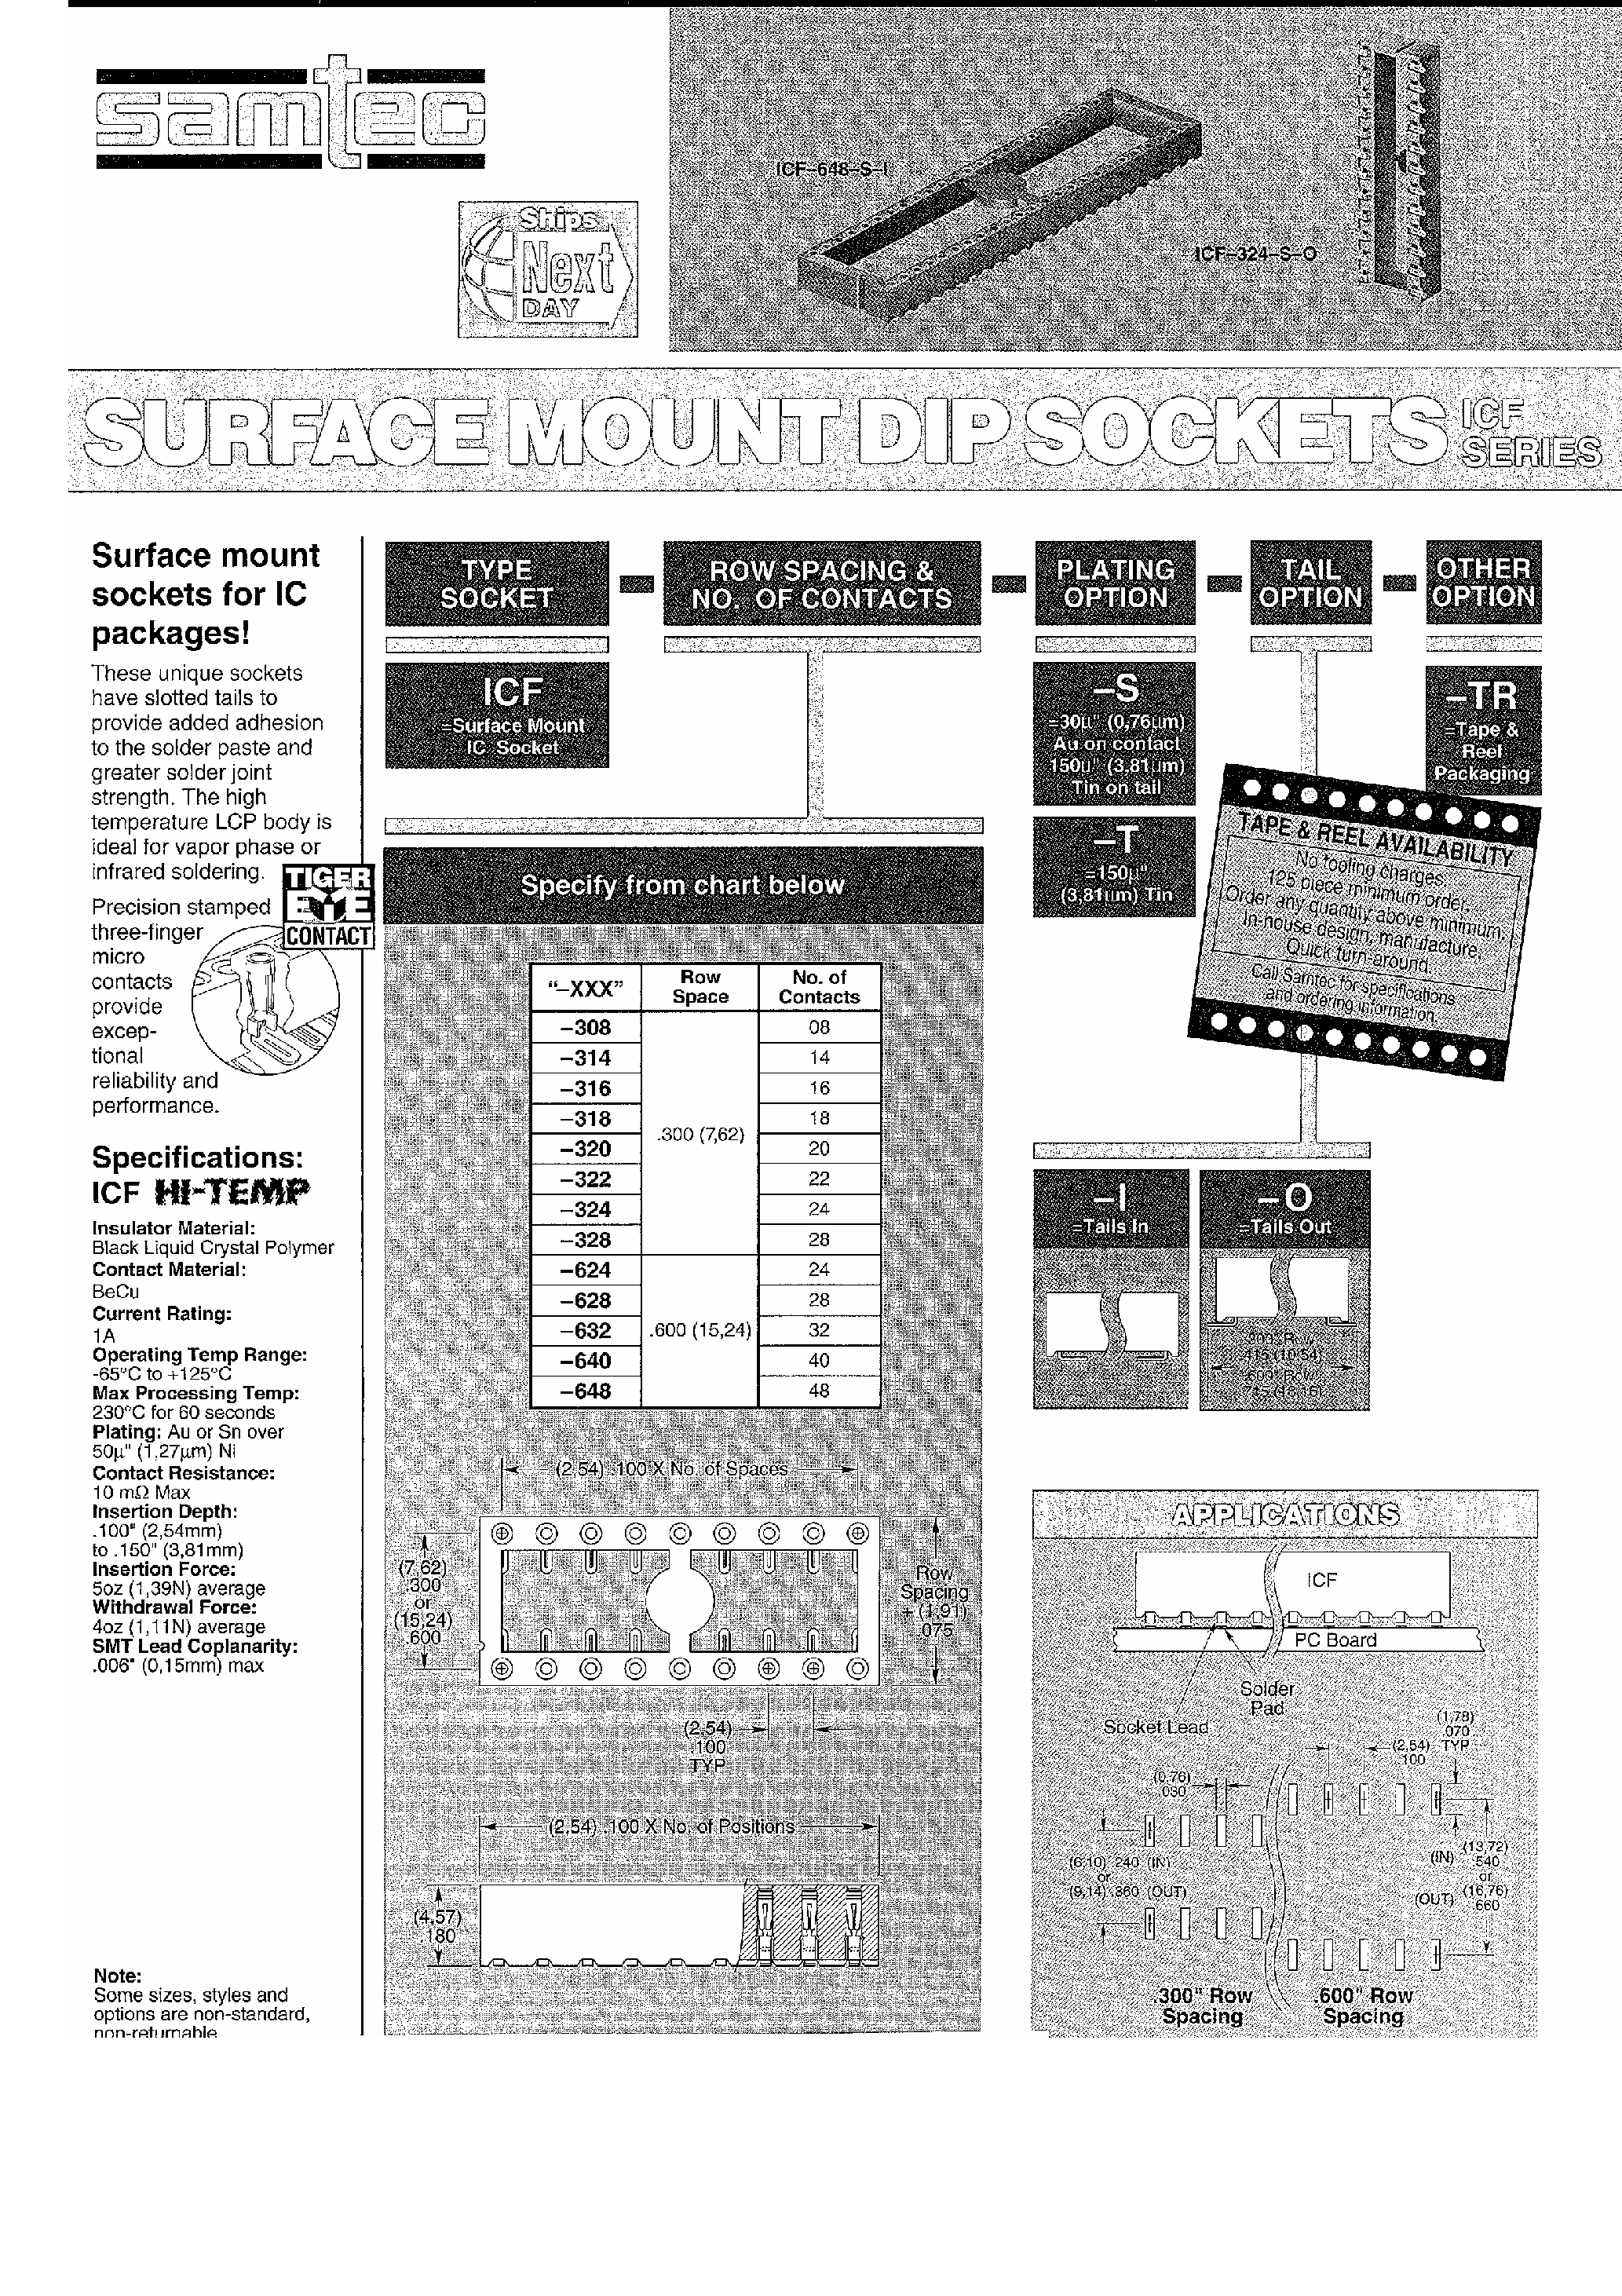 Datasheet ICF-308-T-0-TR - Surface Mount Dip Sockets page 1